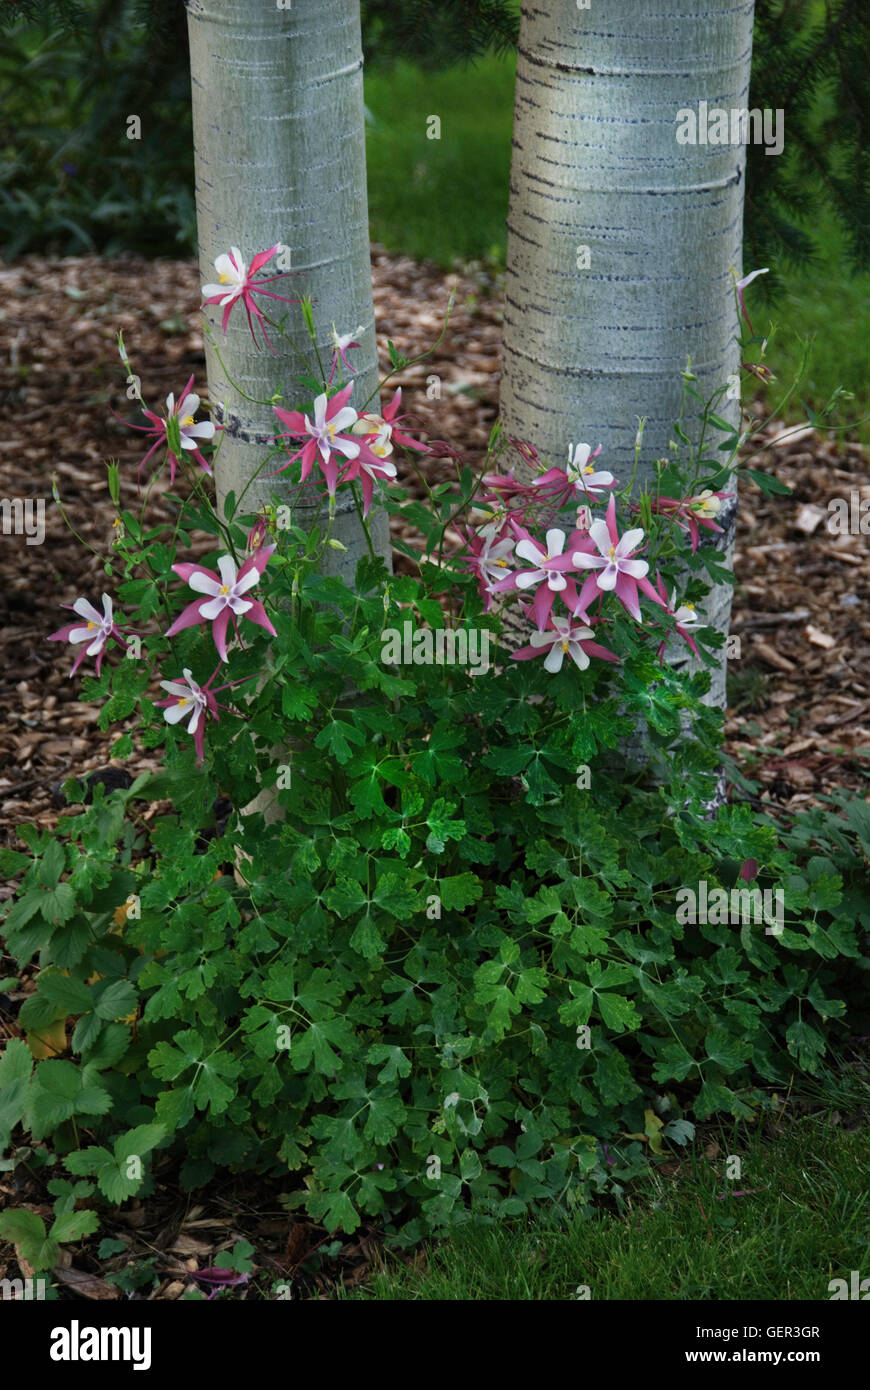 Pink and White Aquilegia, columbine next to Aspen tree Stock Photo